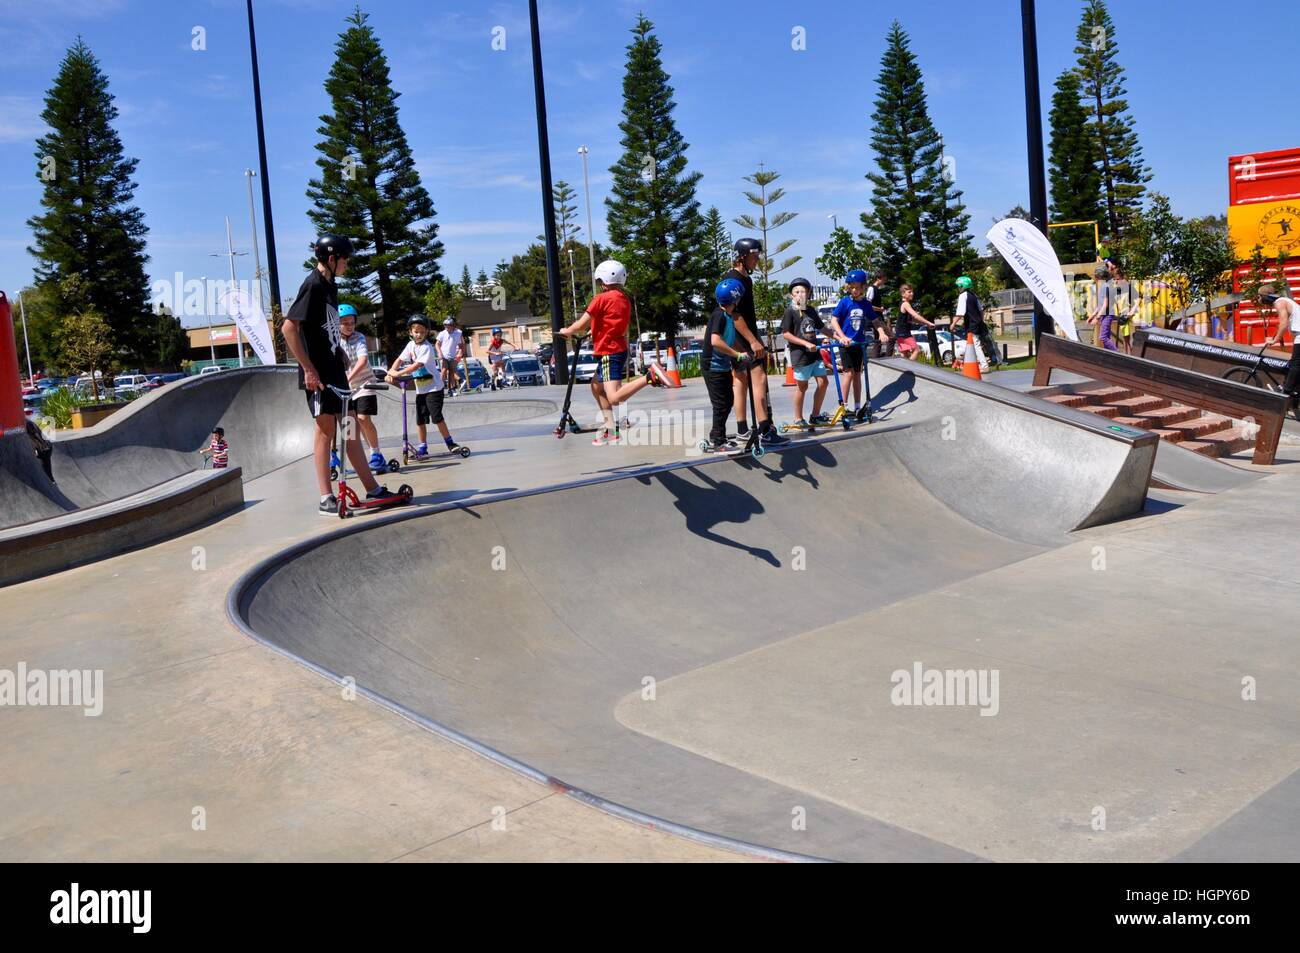 Fremantle,WA,Australia-October 1,2015: Youth Esplanade Plaza skate park with youth scootering in Fremantle, Western Australia. Stock Photo